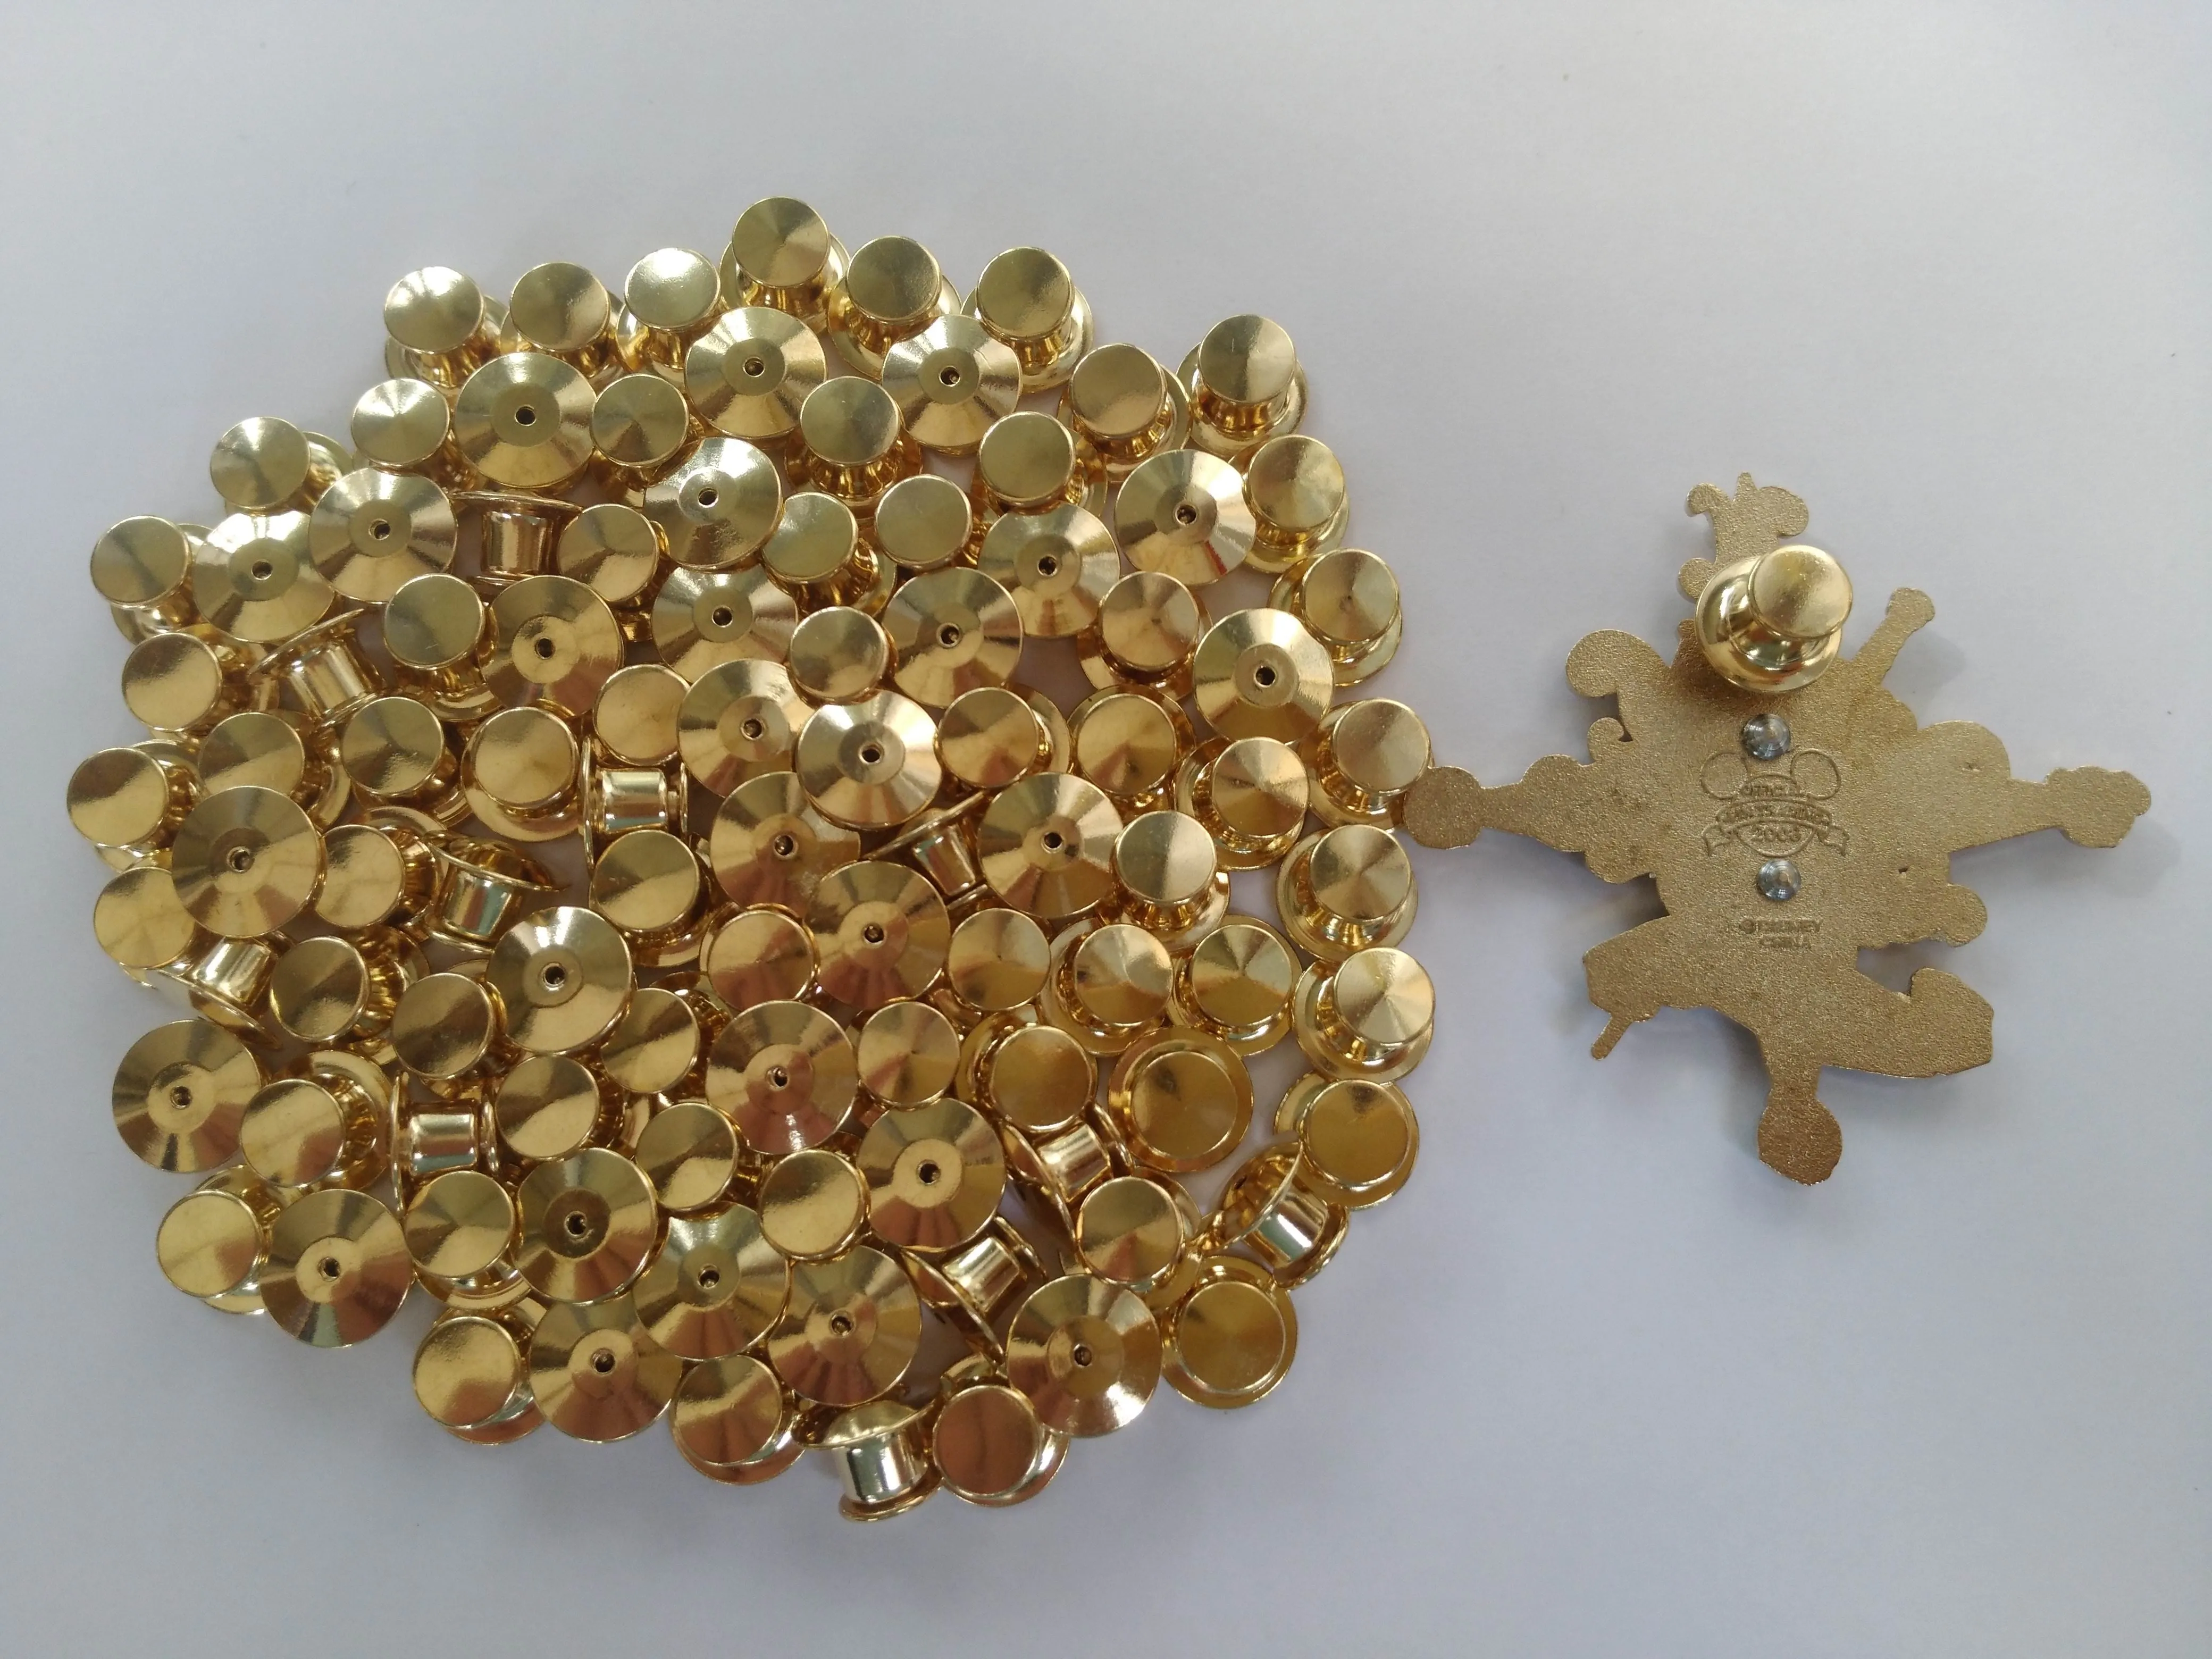 Goldsilver for Milital Police Club Jewelry Hatbrass Lapel Locking Pin Keepers Backs Savers Holders Locks locks clutc227k